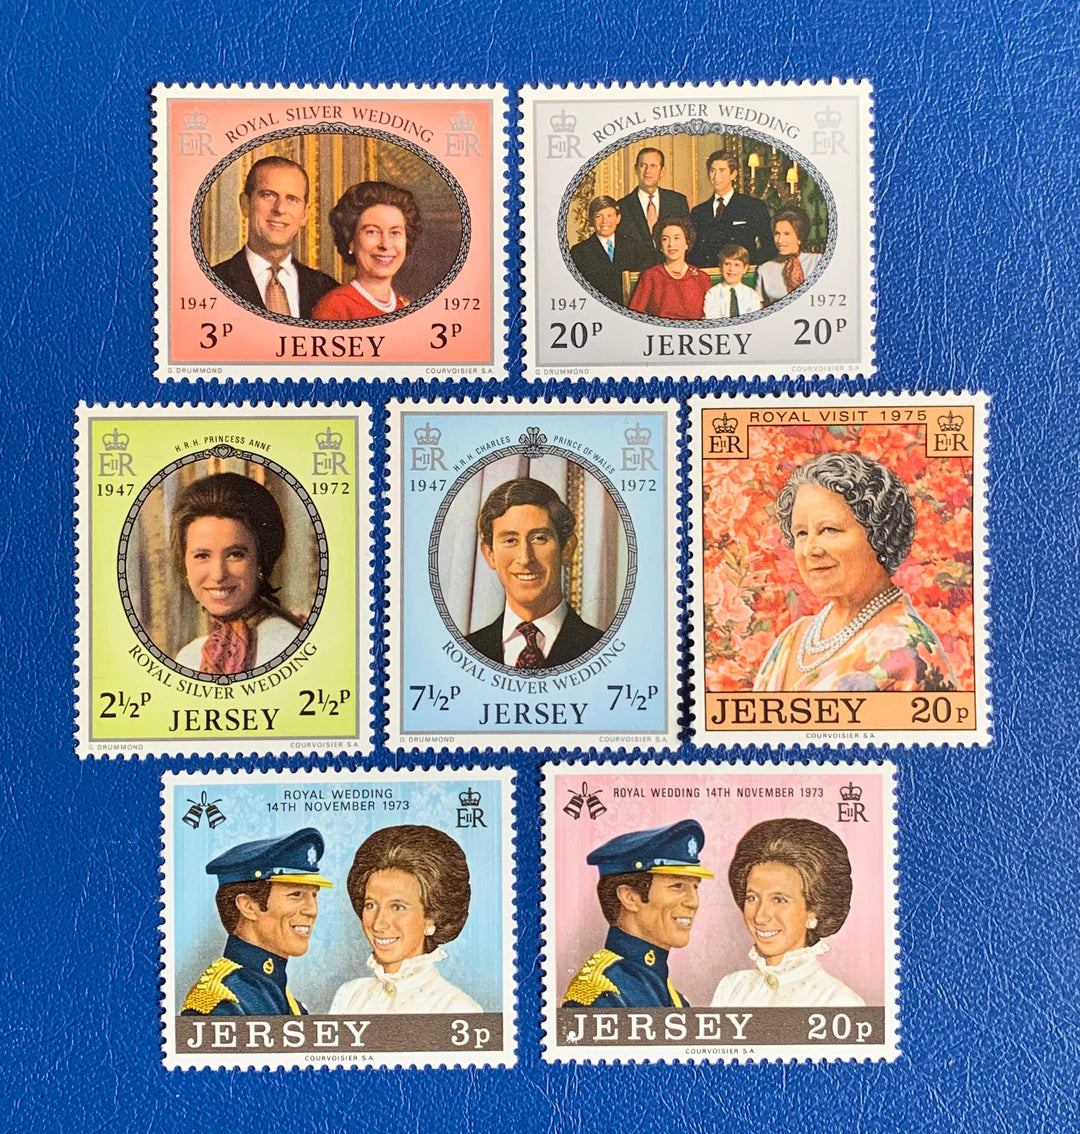 Jersey - Original Vintage Postage Stamps - 1972,73,75 - Royal Wedding, Silver Wedding Anniversary, Royal Visit